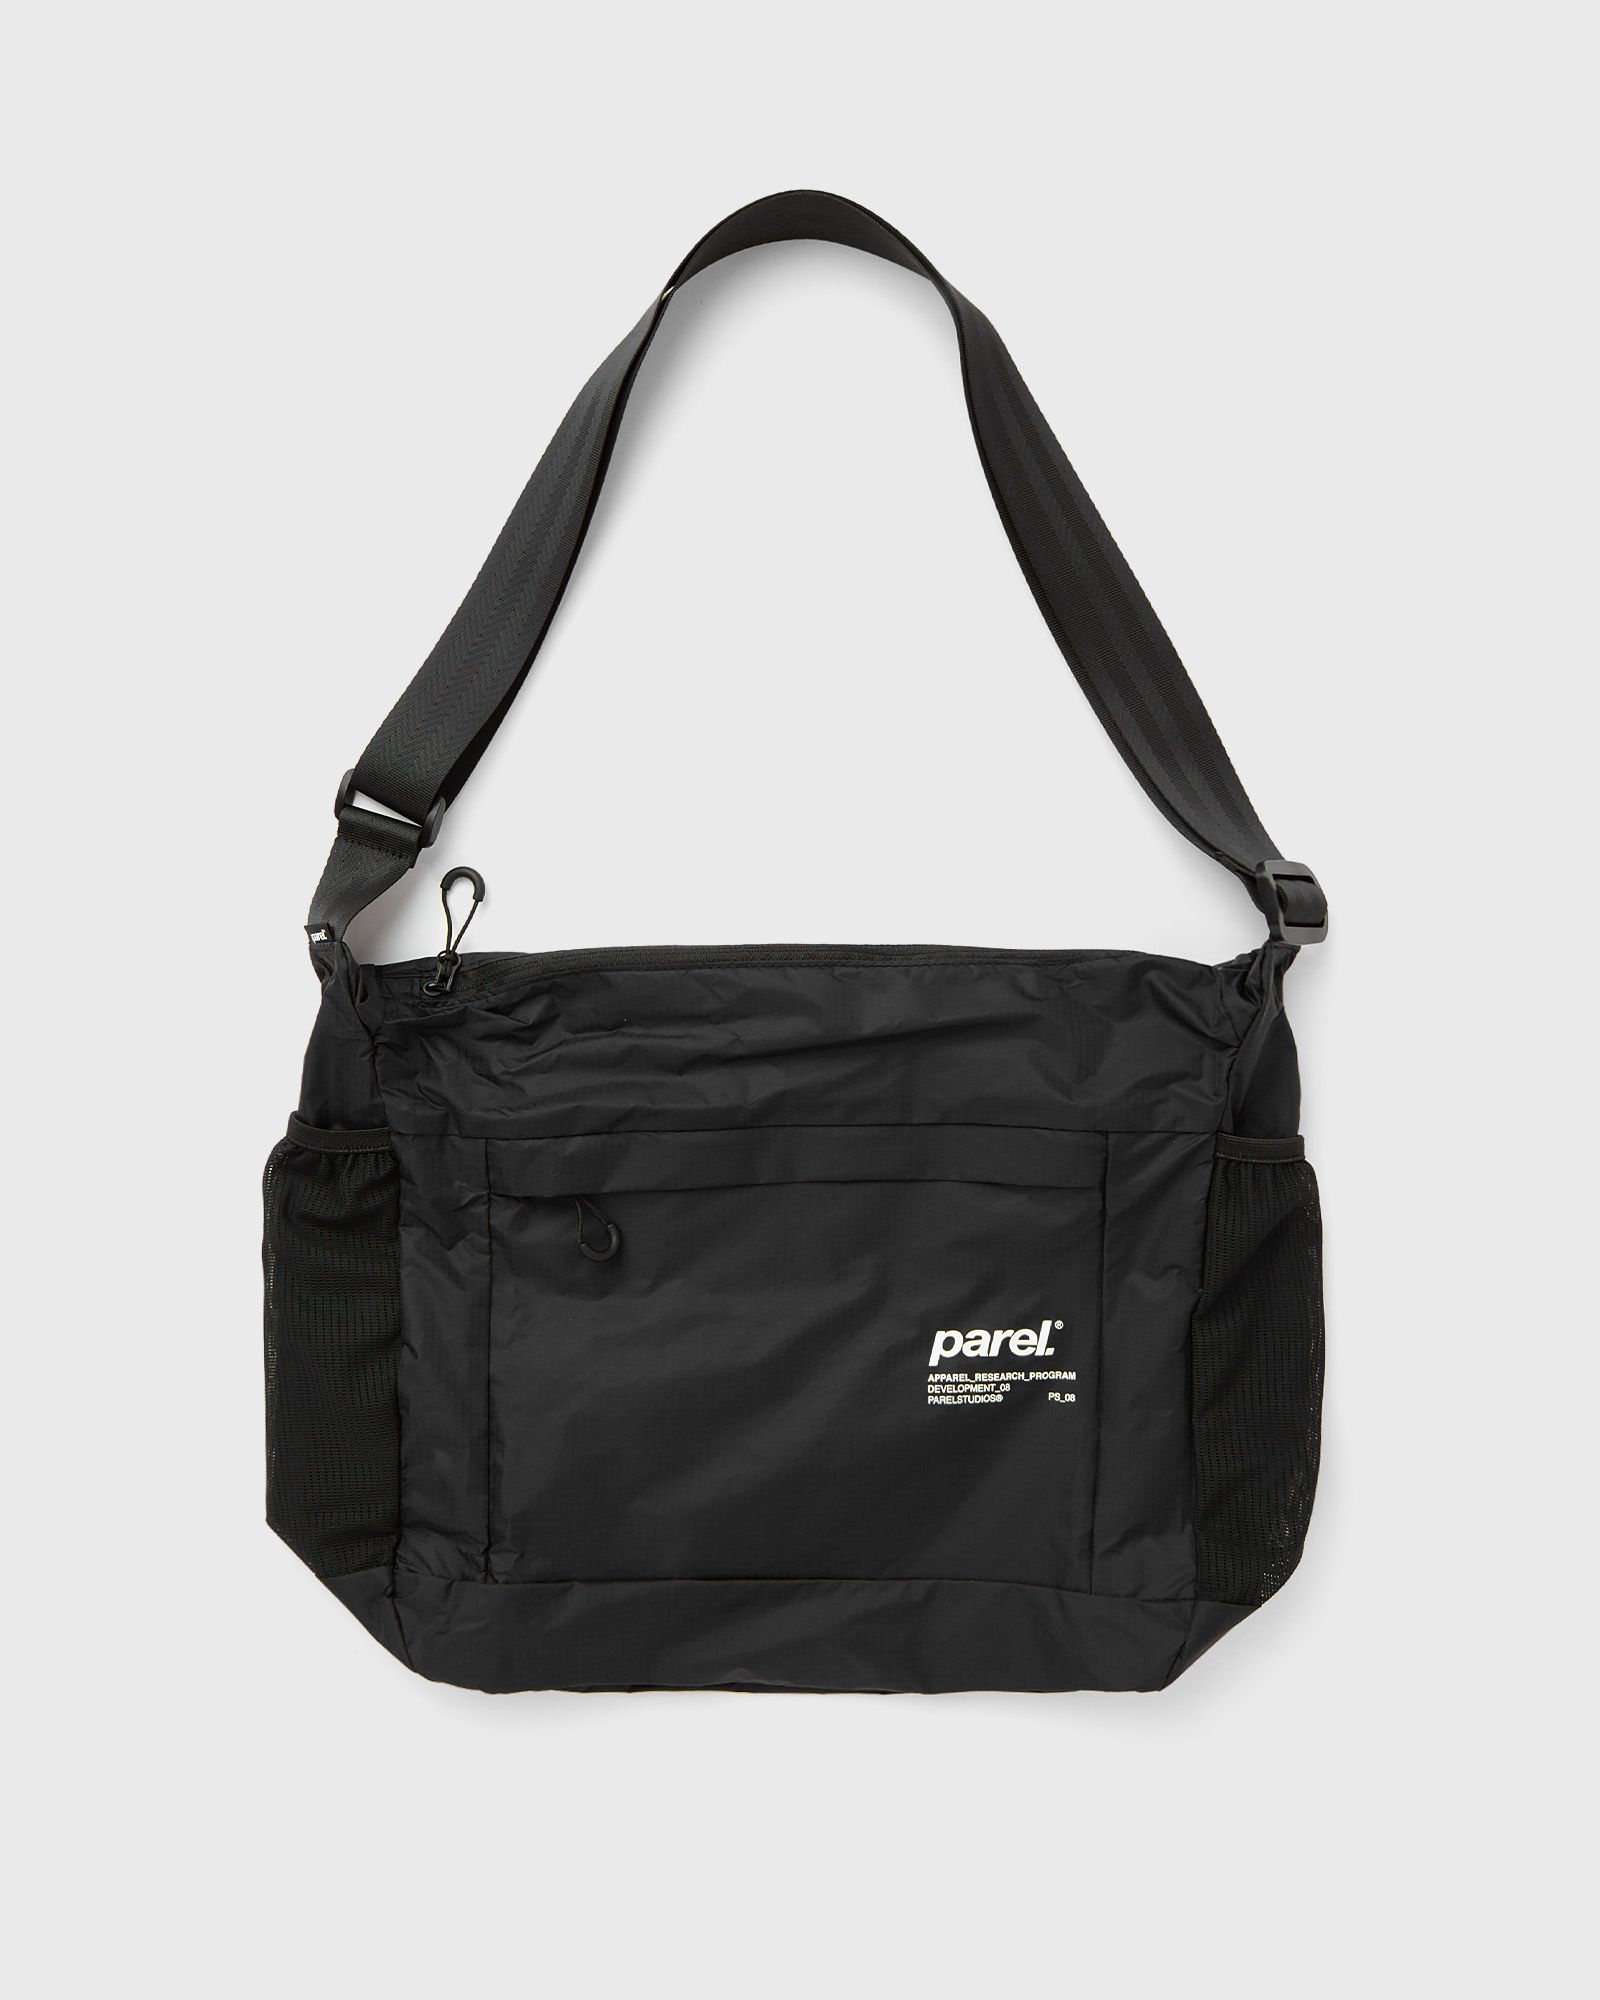 Parel studios - lokka bag m men messenger & crossbody bags black in größe:one size